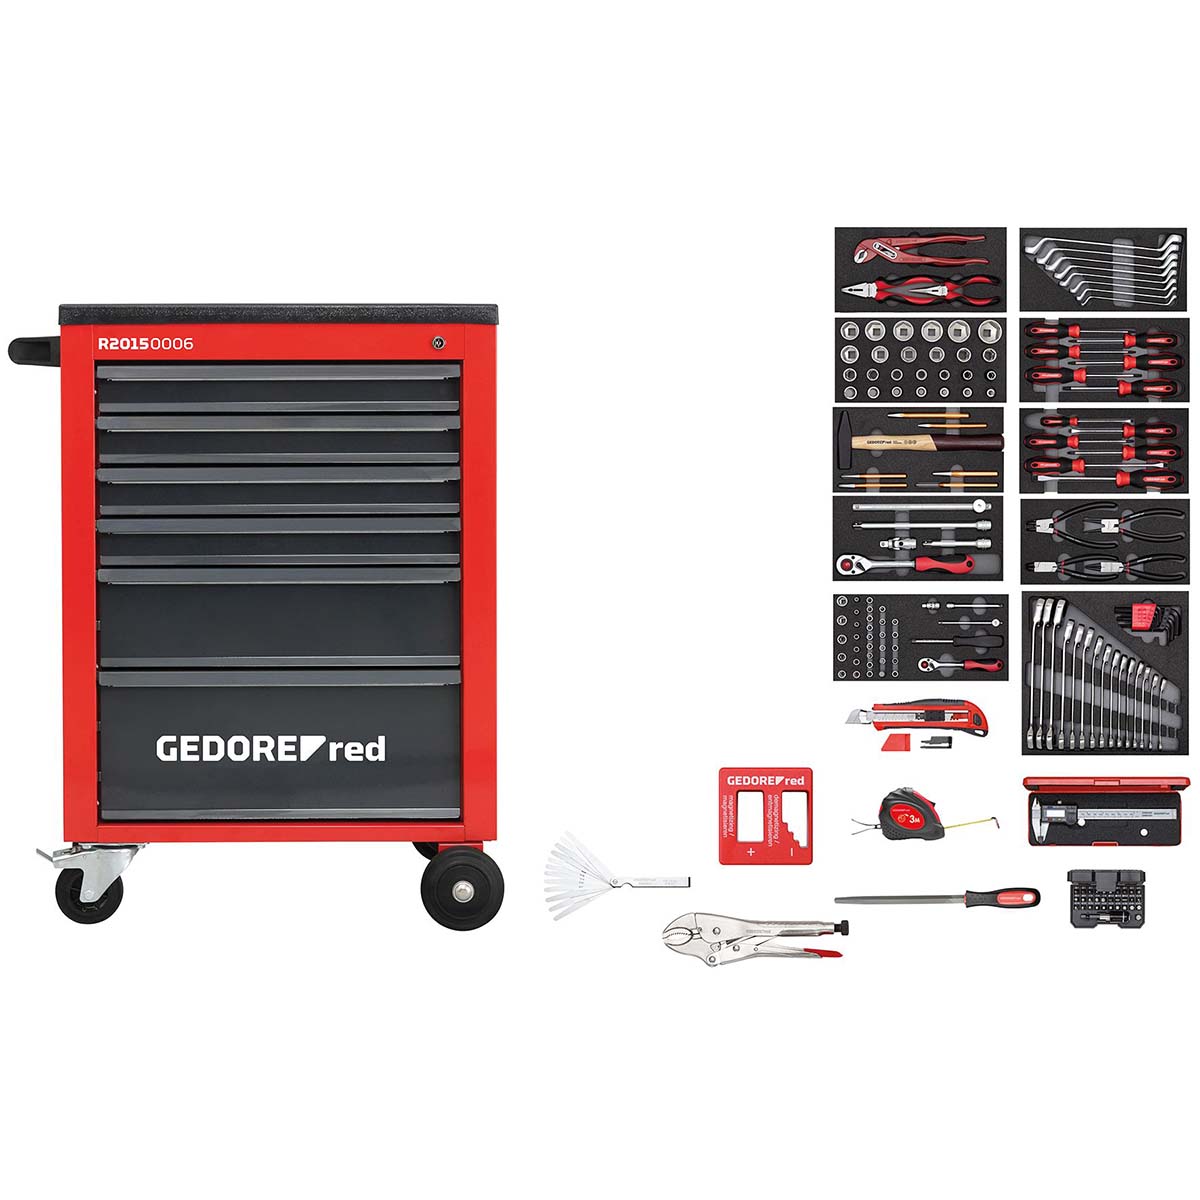 GEDORE rouge R21560001 - Servante d'atelier MÉCANICIEN avec assortiment de 164 outils (3301668)